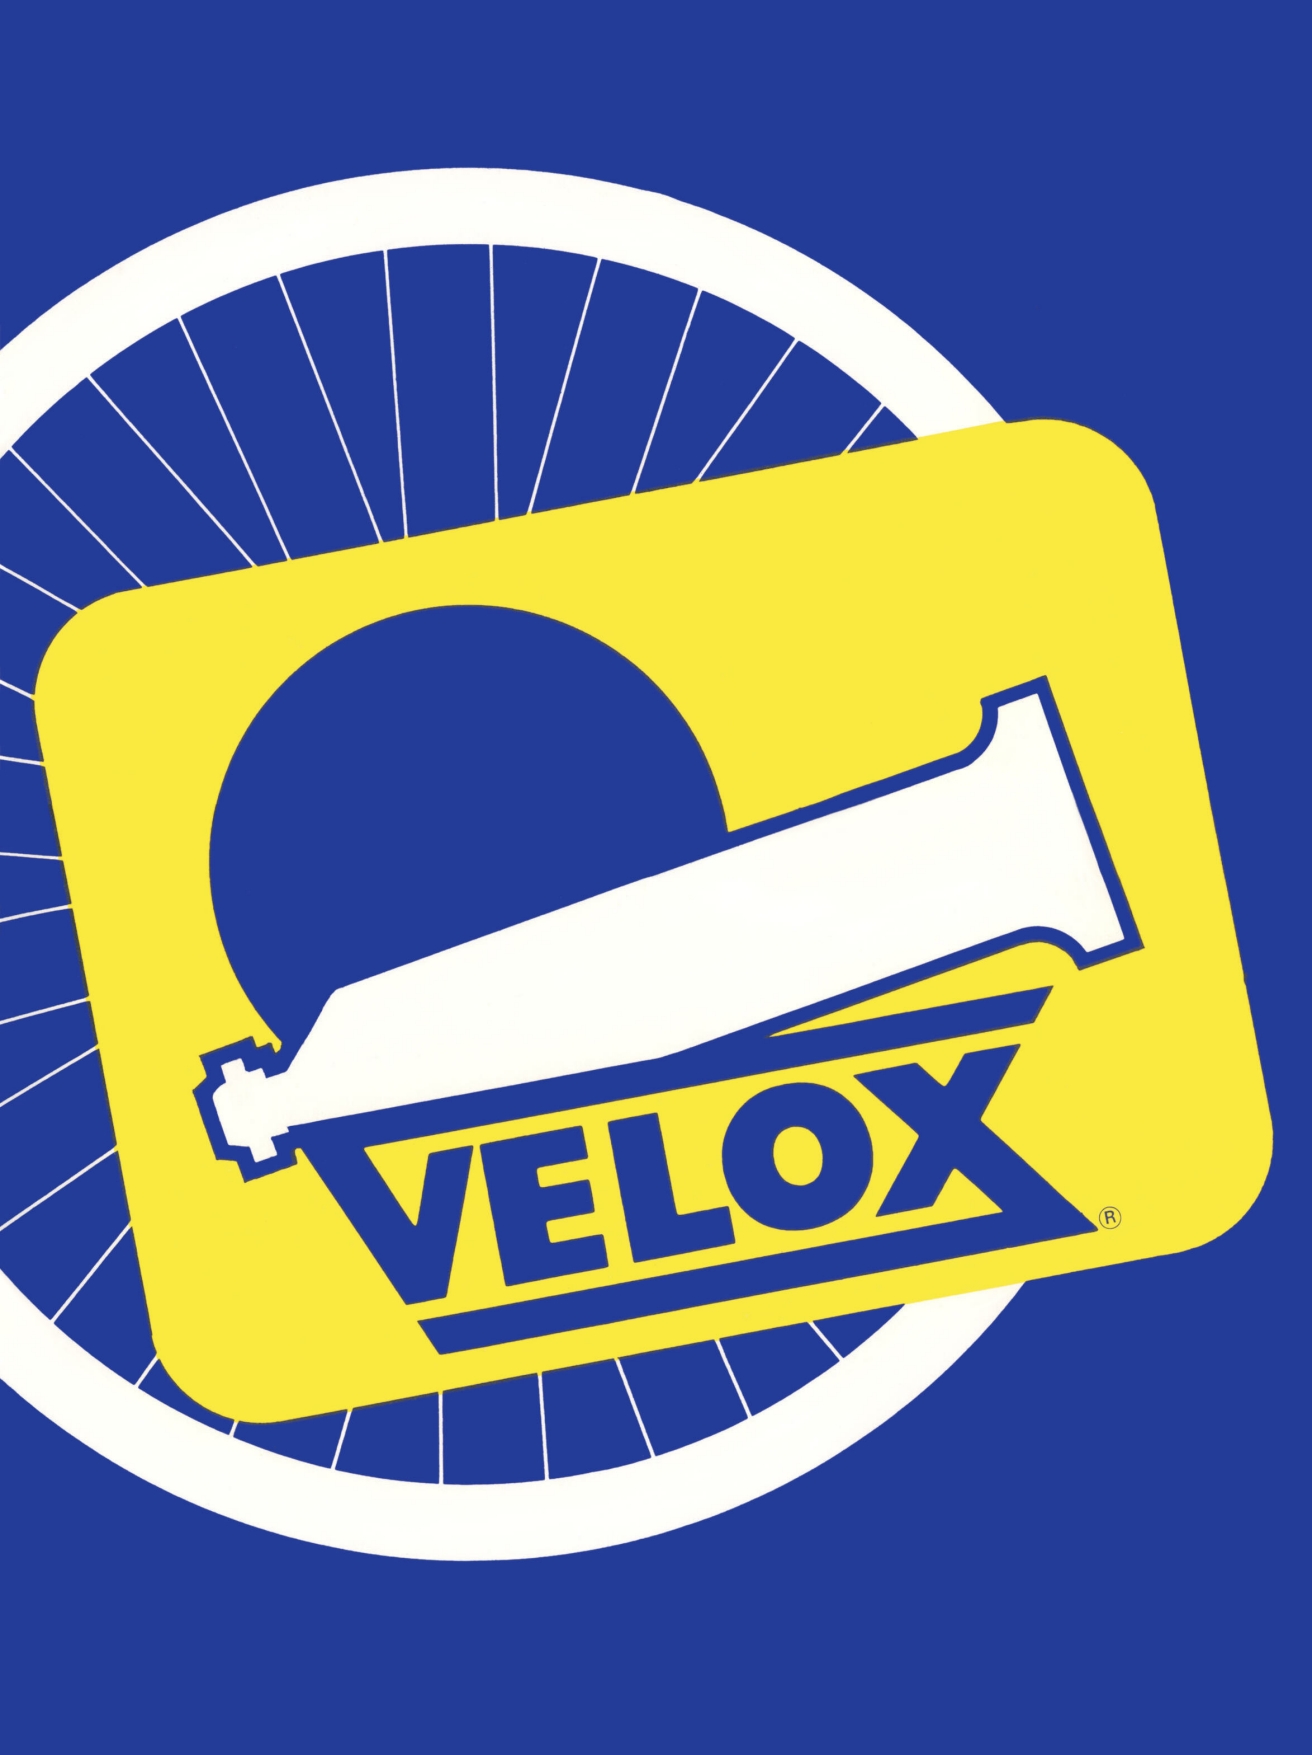 Velox Poster (1980's)